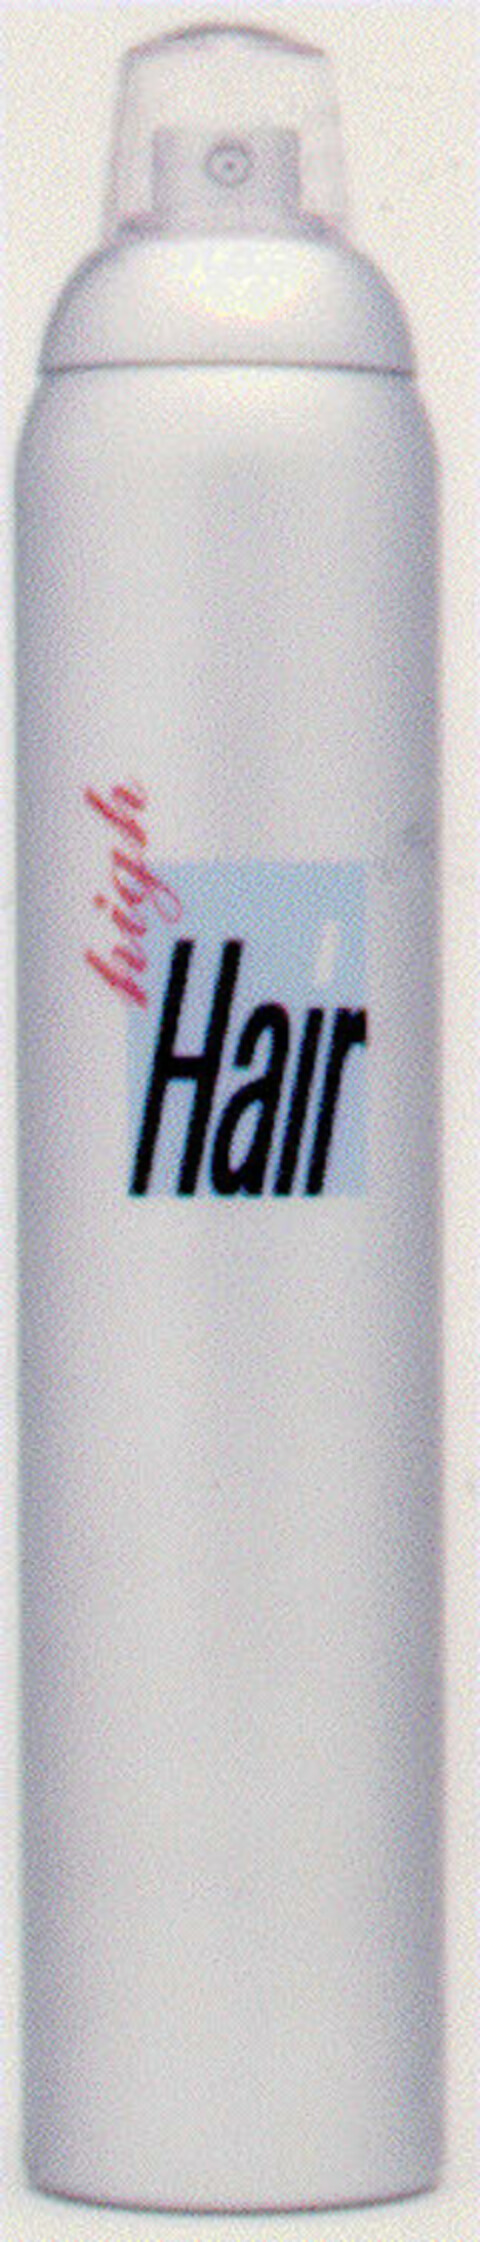 high Hair Logo (DPMA, 28.09.1996)